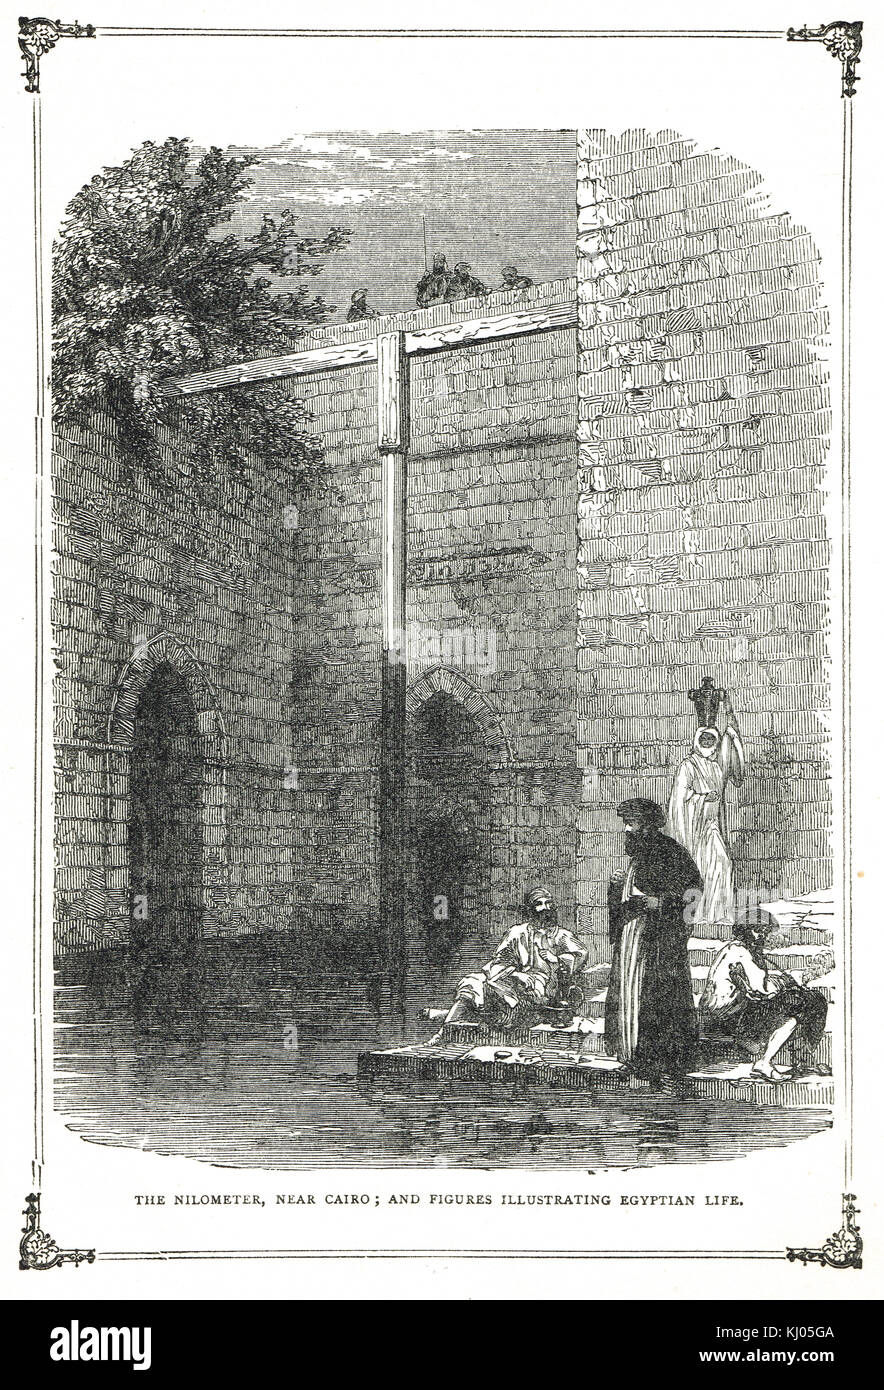 Nilometer in 19th century Cairo, Egypt Stock Photo